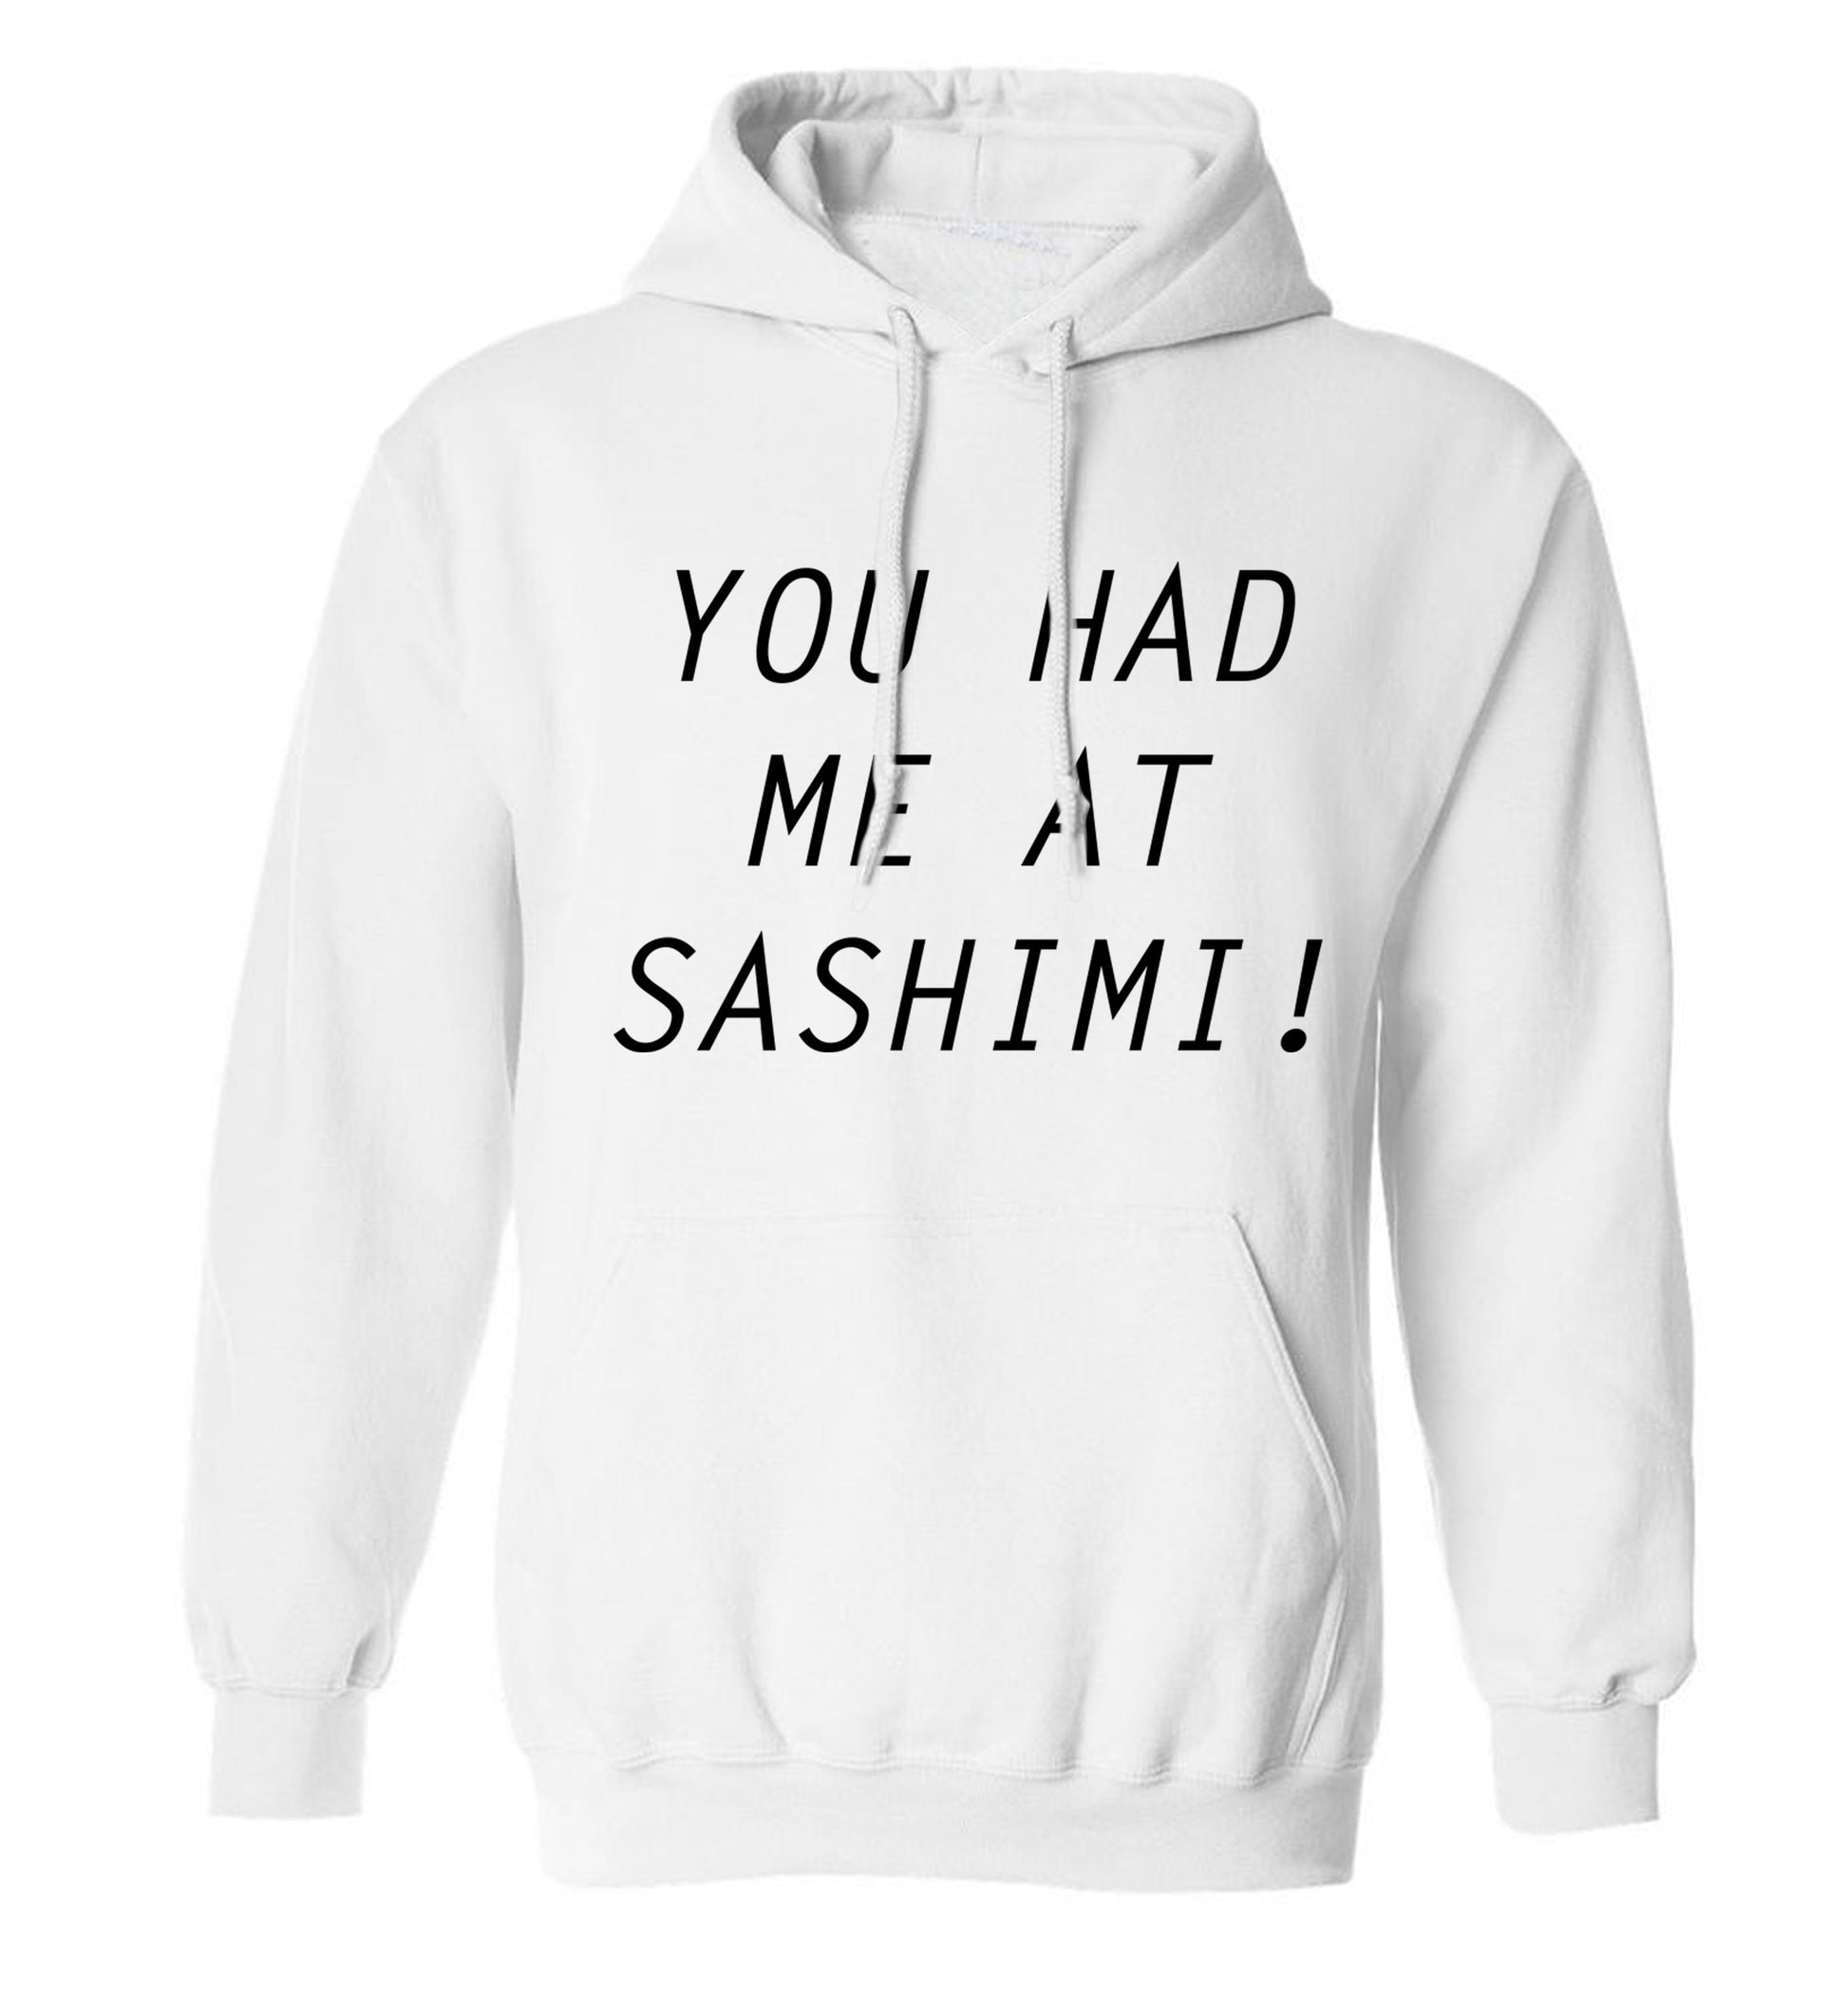 You had me at sashimi adults unisex white hoodie 2XL